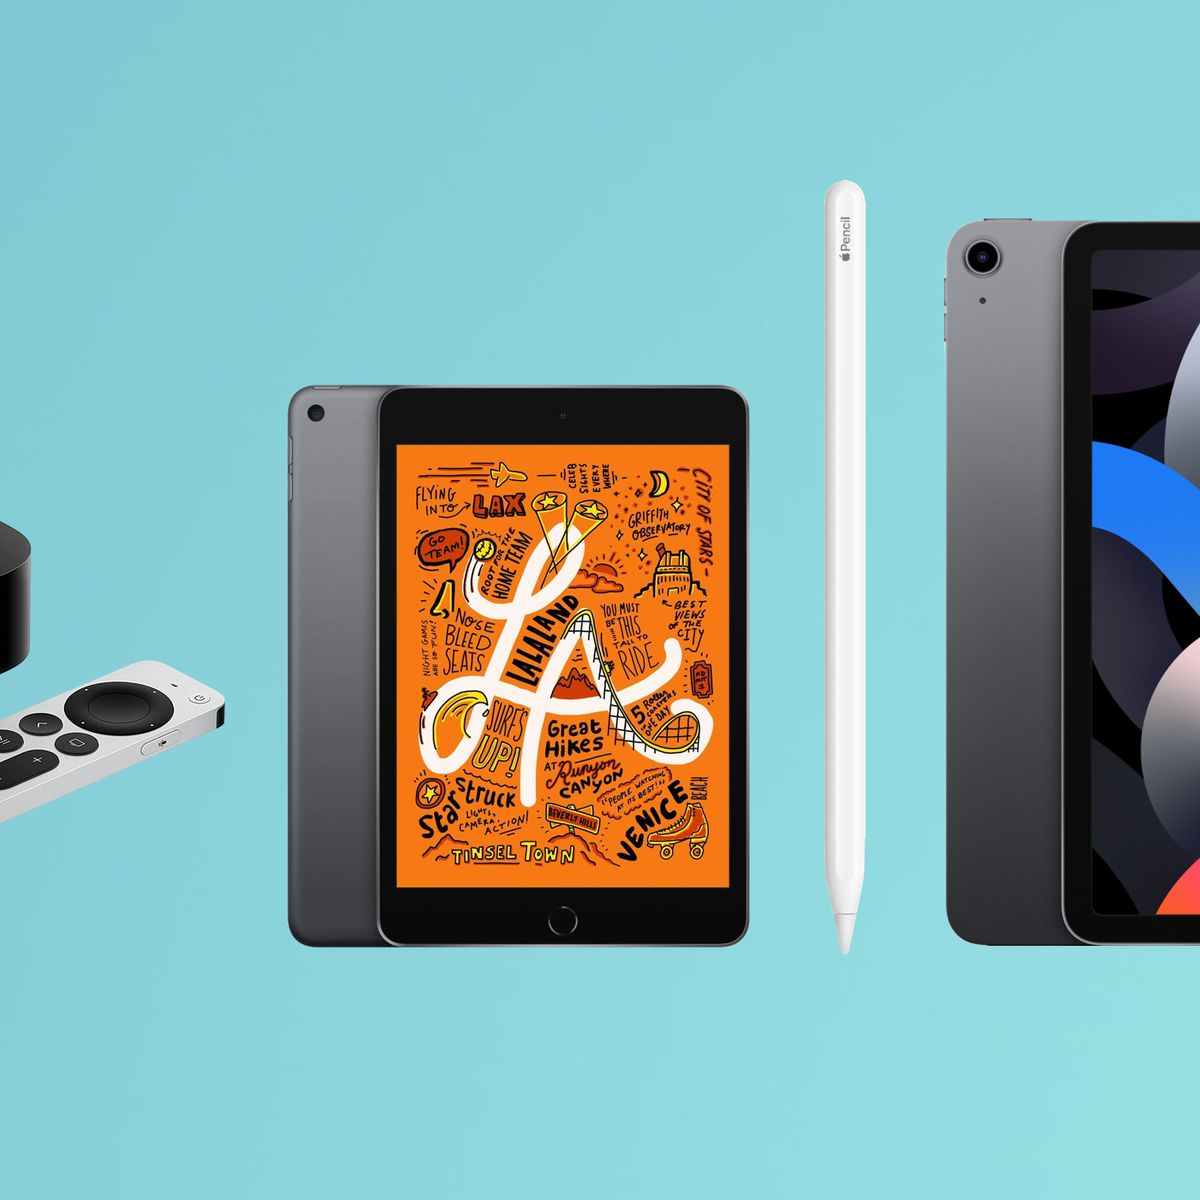 Deals: Record Low Prices Arrive for Apple TV, iPad Mini 5, iPad